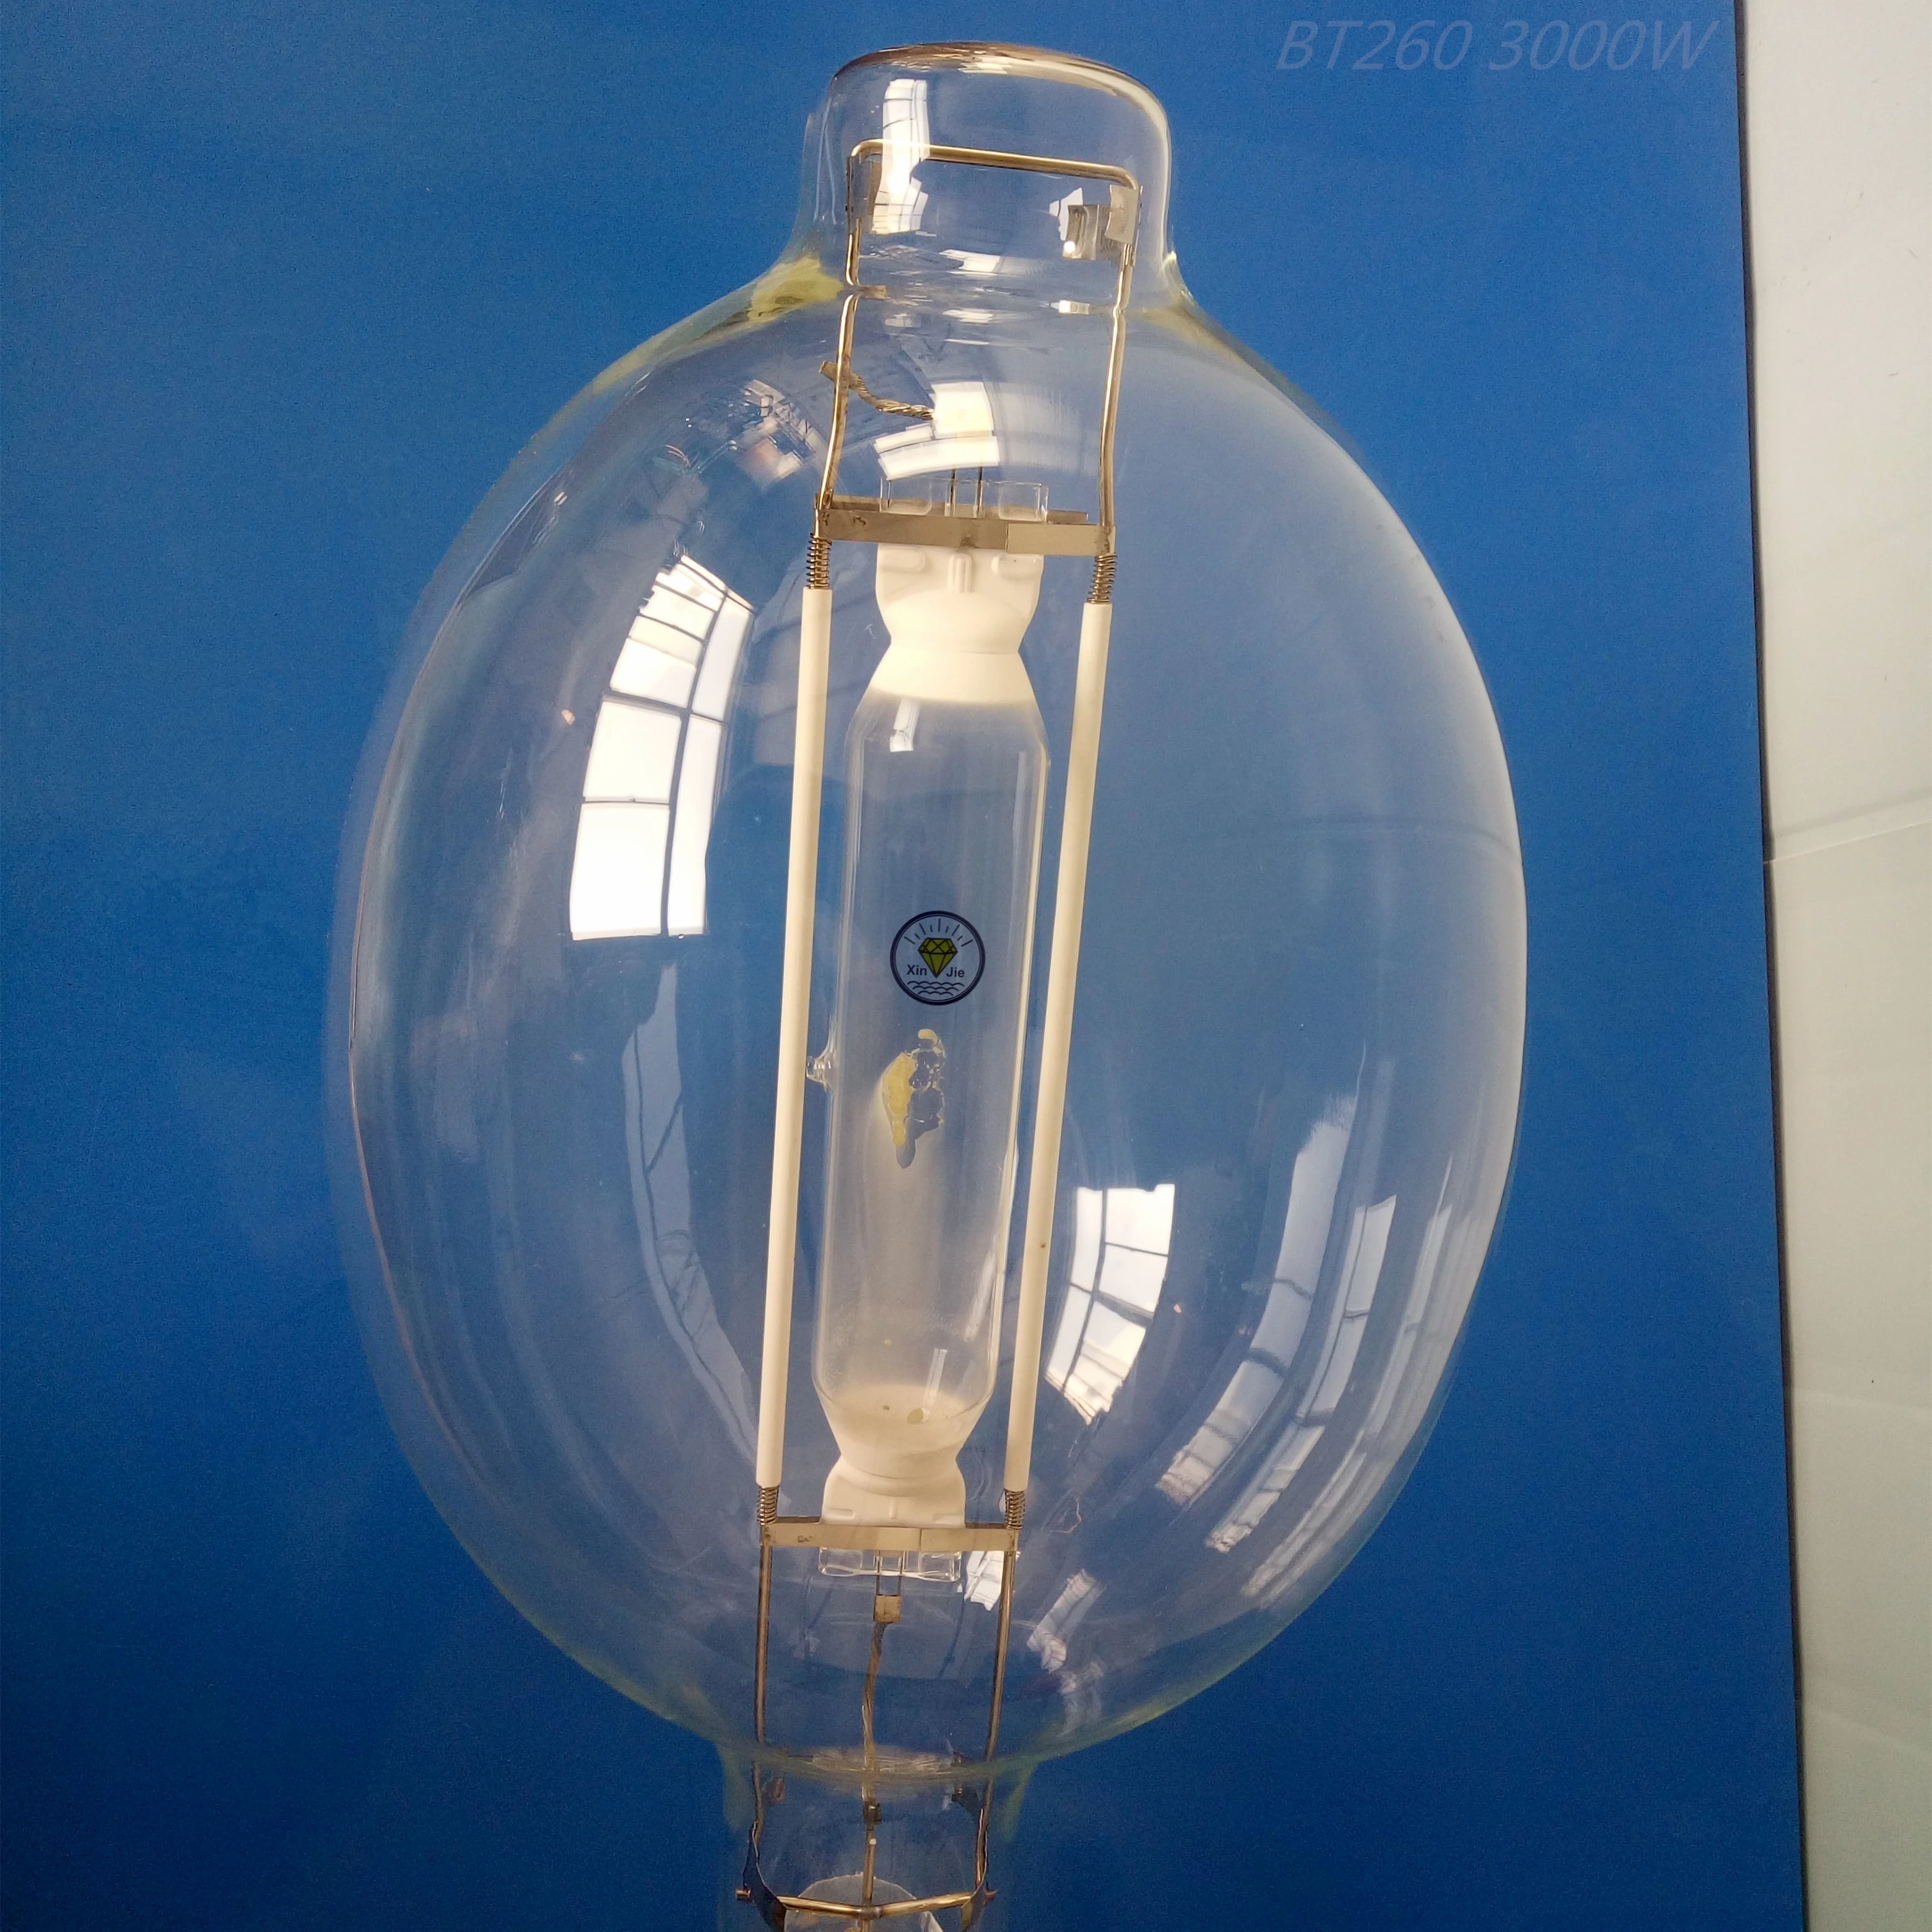 BT260 squid fishing light 3000w metal halide lamp on water vessel fishing facilities professional HID light